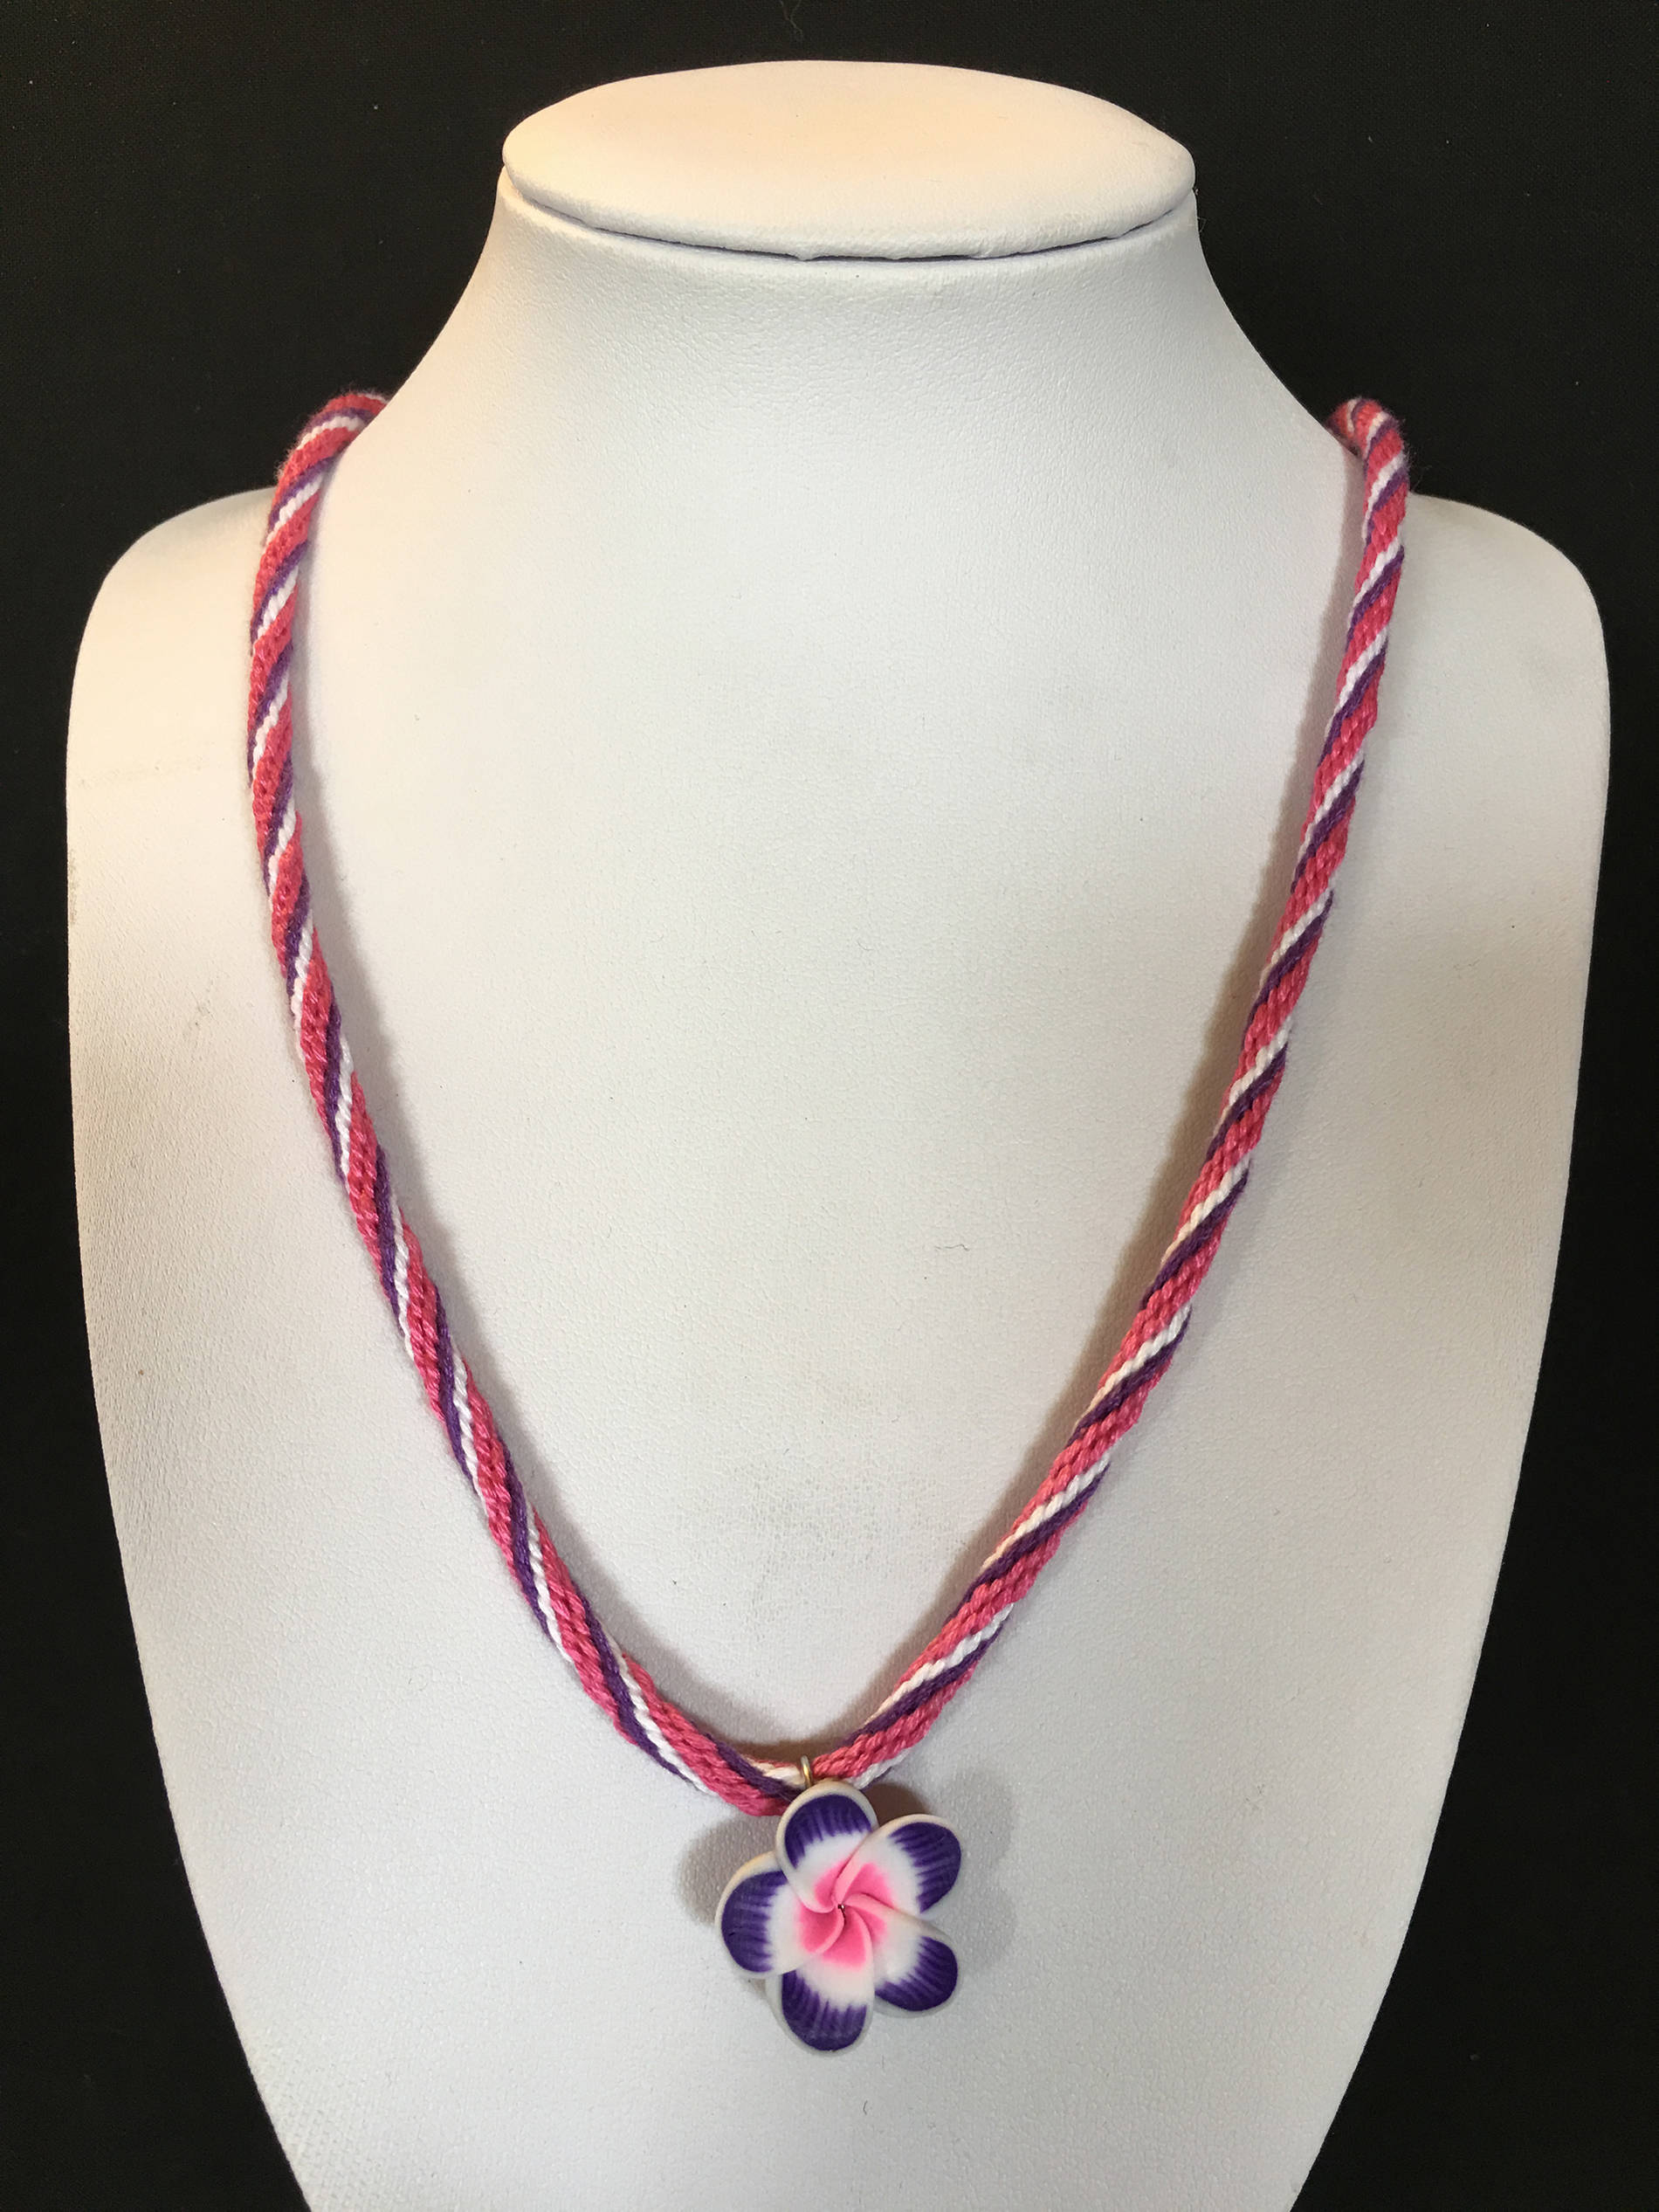 tahiti créa - Tahiti Iti créa - Rêv'claire - Collier coton tressé art japonais Kumihimo fleur fimo violette coeur rose - coton DMC